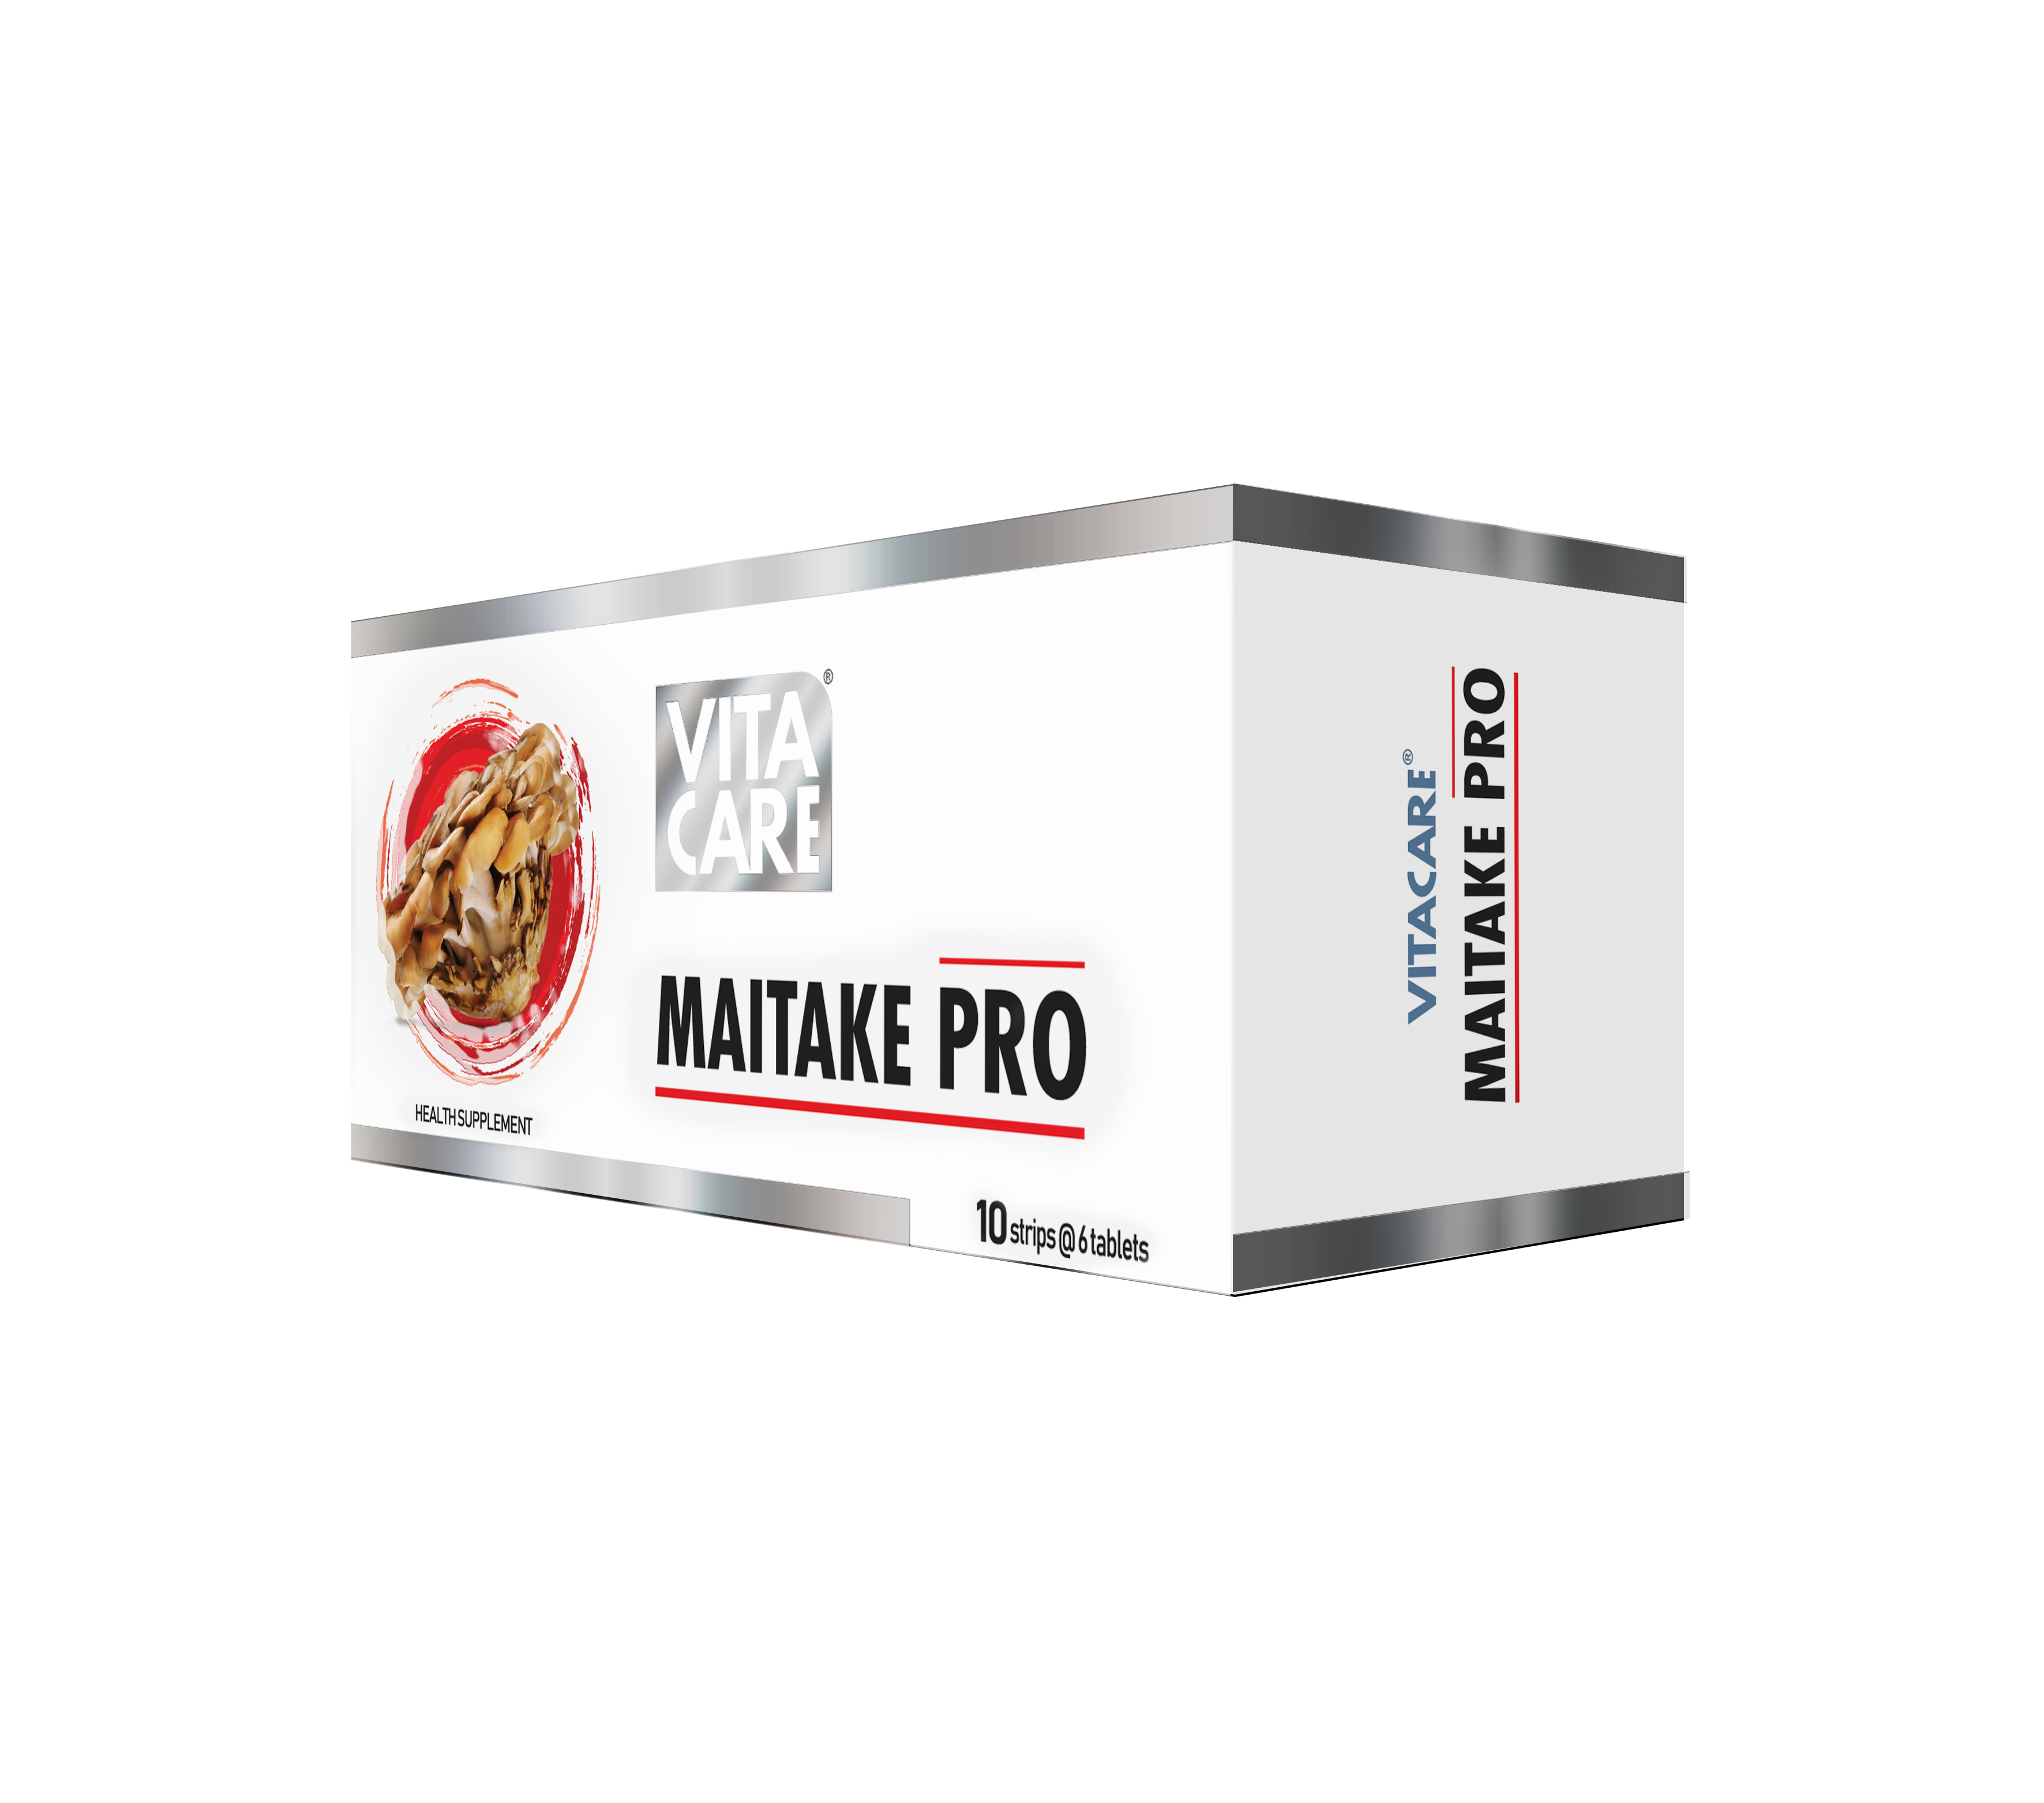 Vitacare Maitake Pro